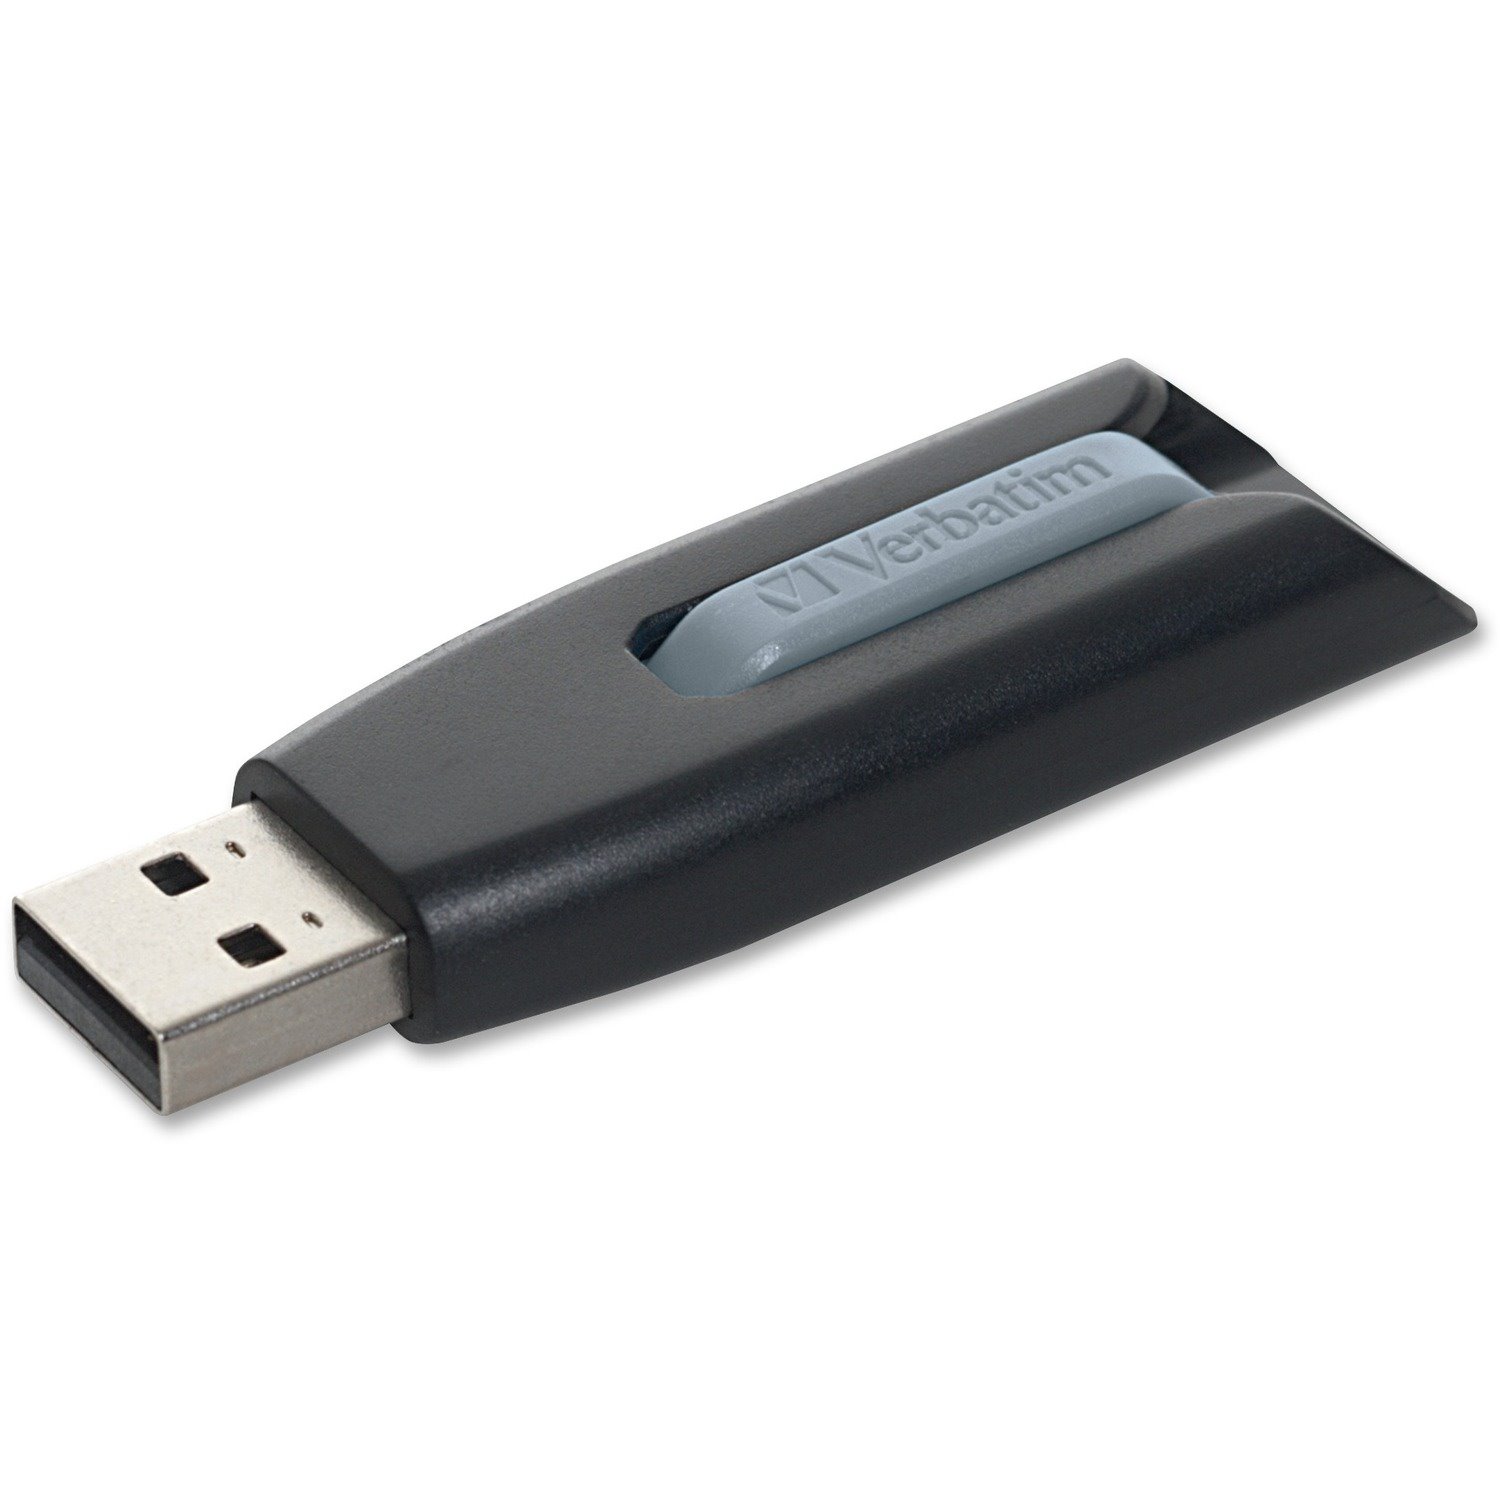 Verbatim Store 'n' Go V3 16 GB USB 3.0 Flash Drive - Grey 